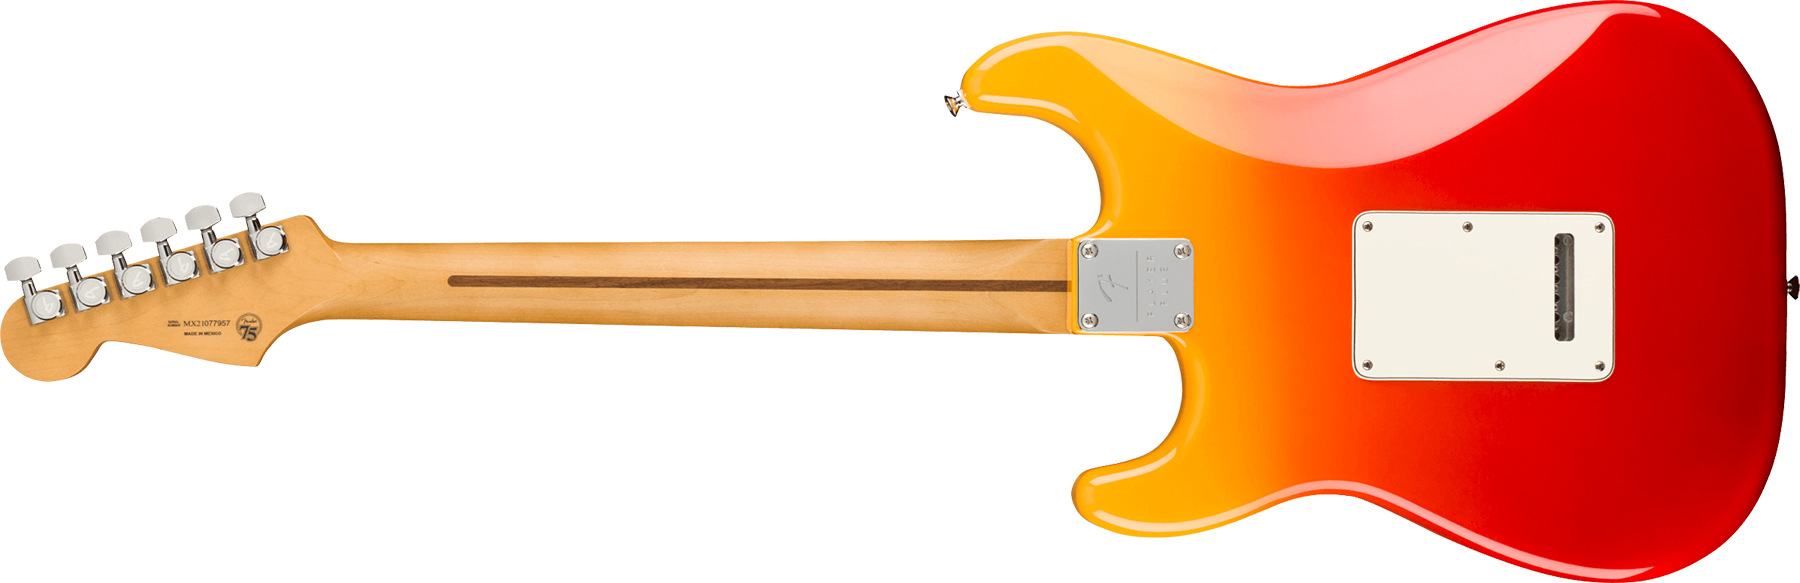 Fender Strat Player Plus Lh Gaucher Mex 3s Trem Pf - Tequila Sunrise - Left-handed electric guitar - Variation 1